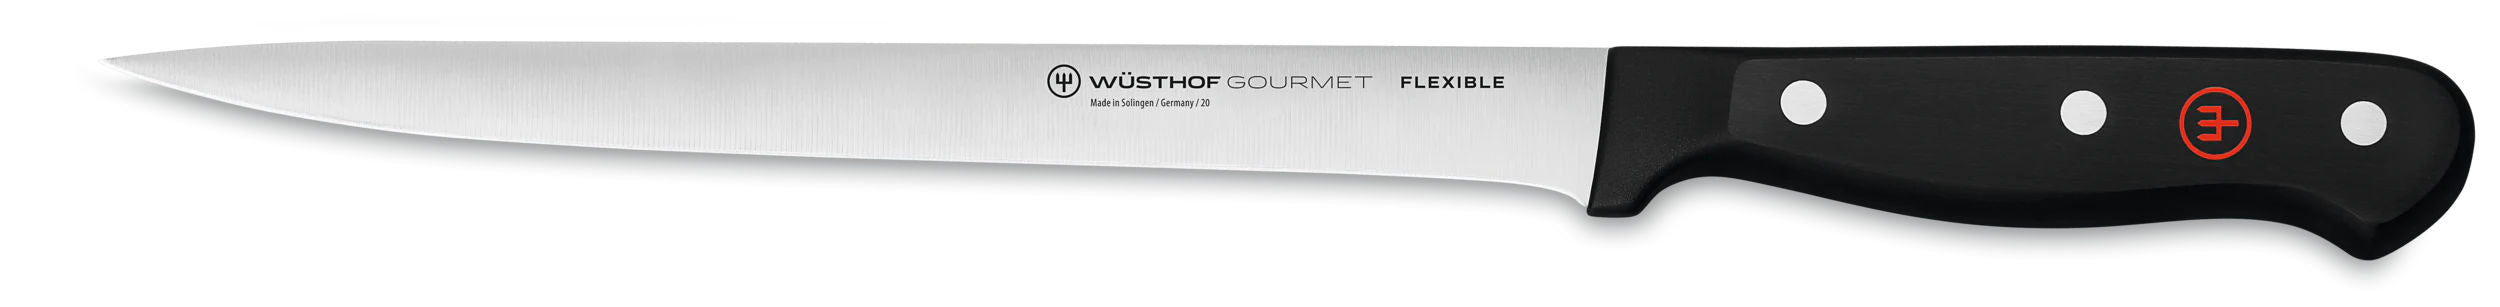 Wusthof Gourmet Fish Fillet Knife, 8 (20cm), Flexible - 4618-20 